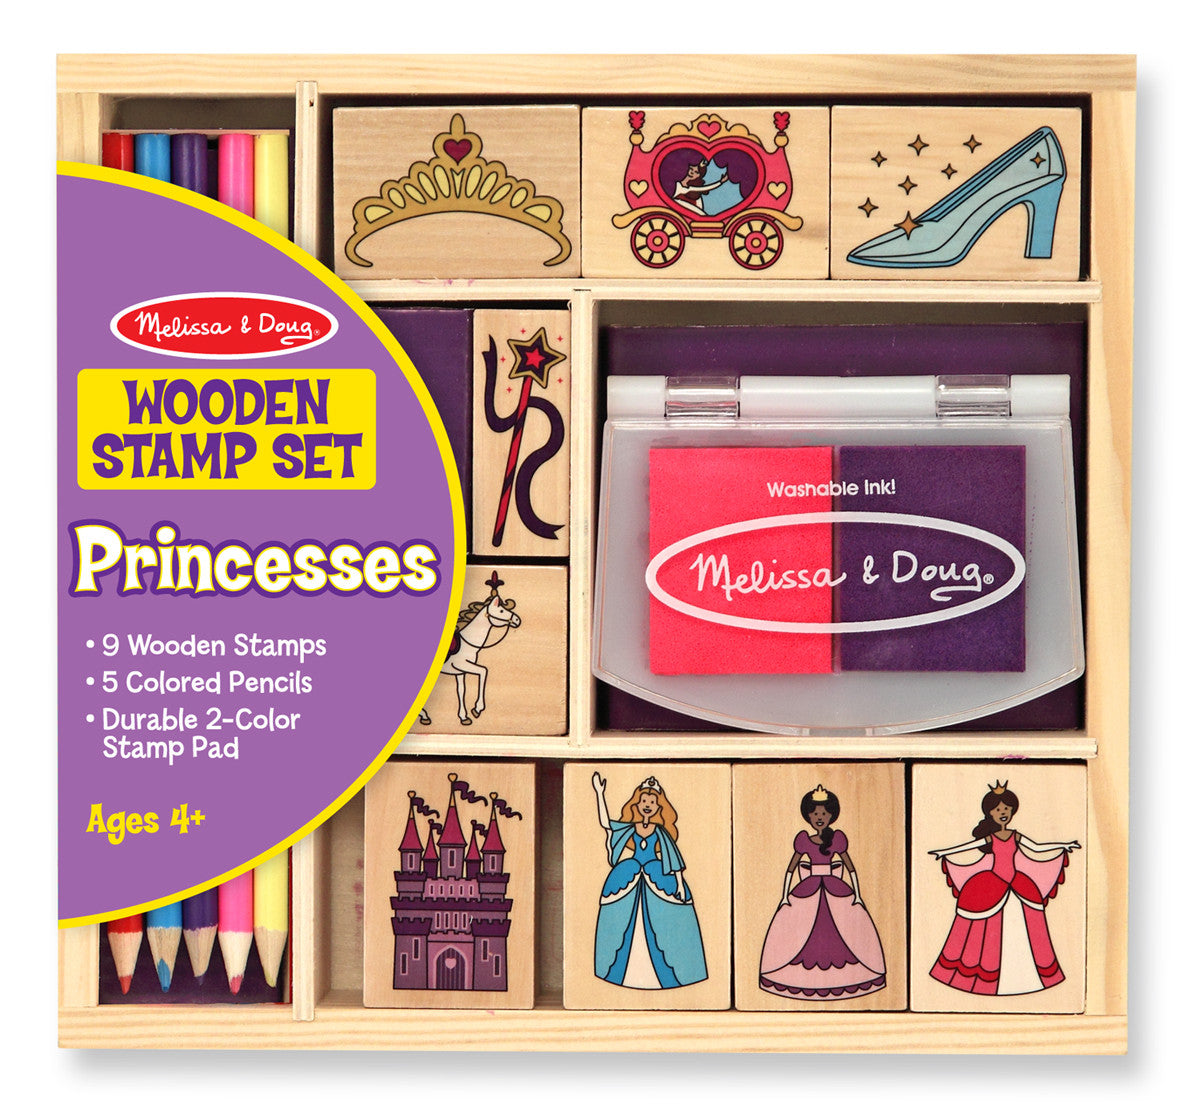 Melissa & Doug Wooden Princess Stamp Set